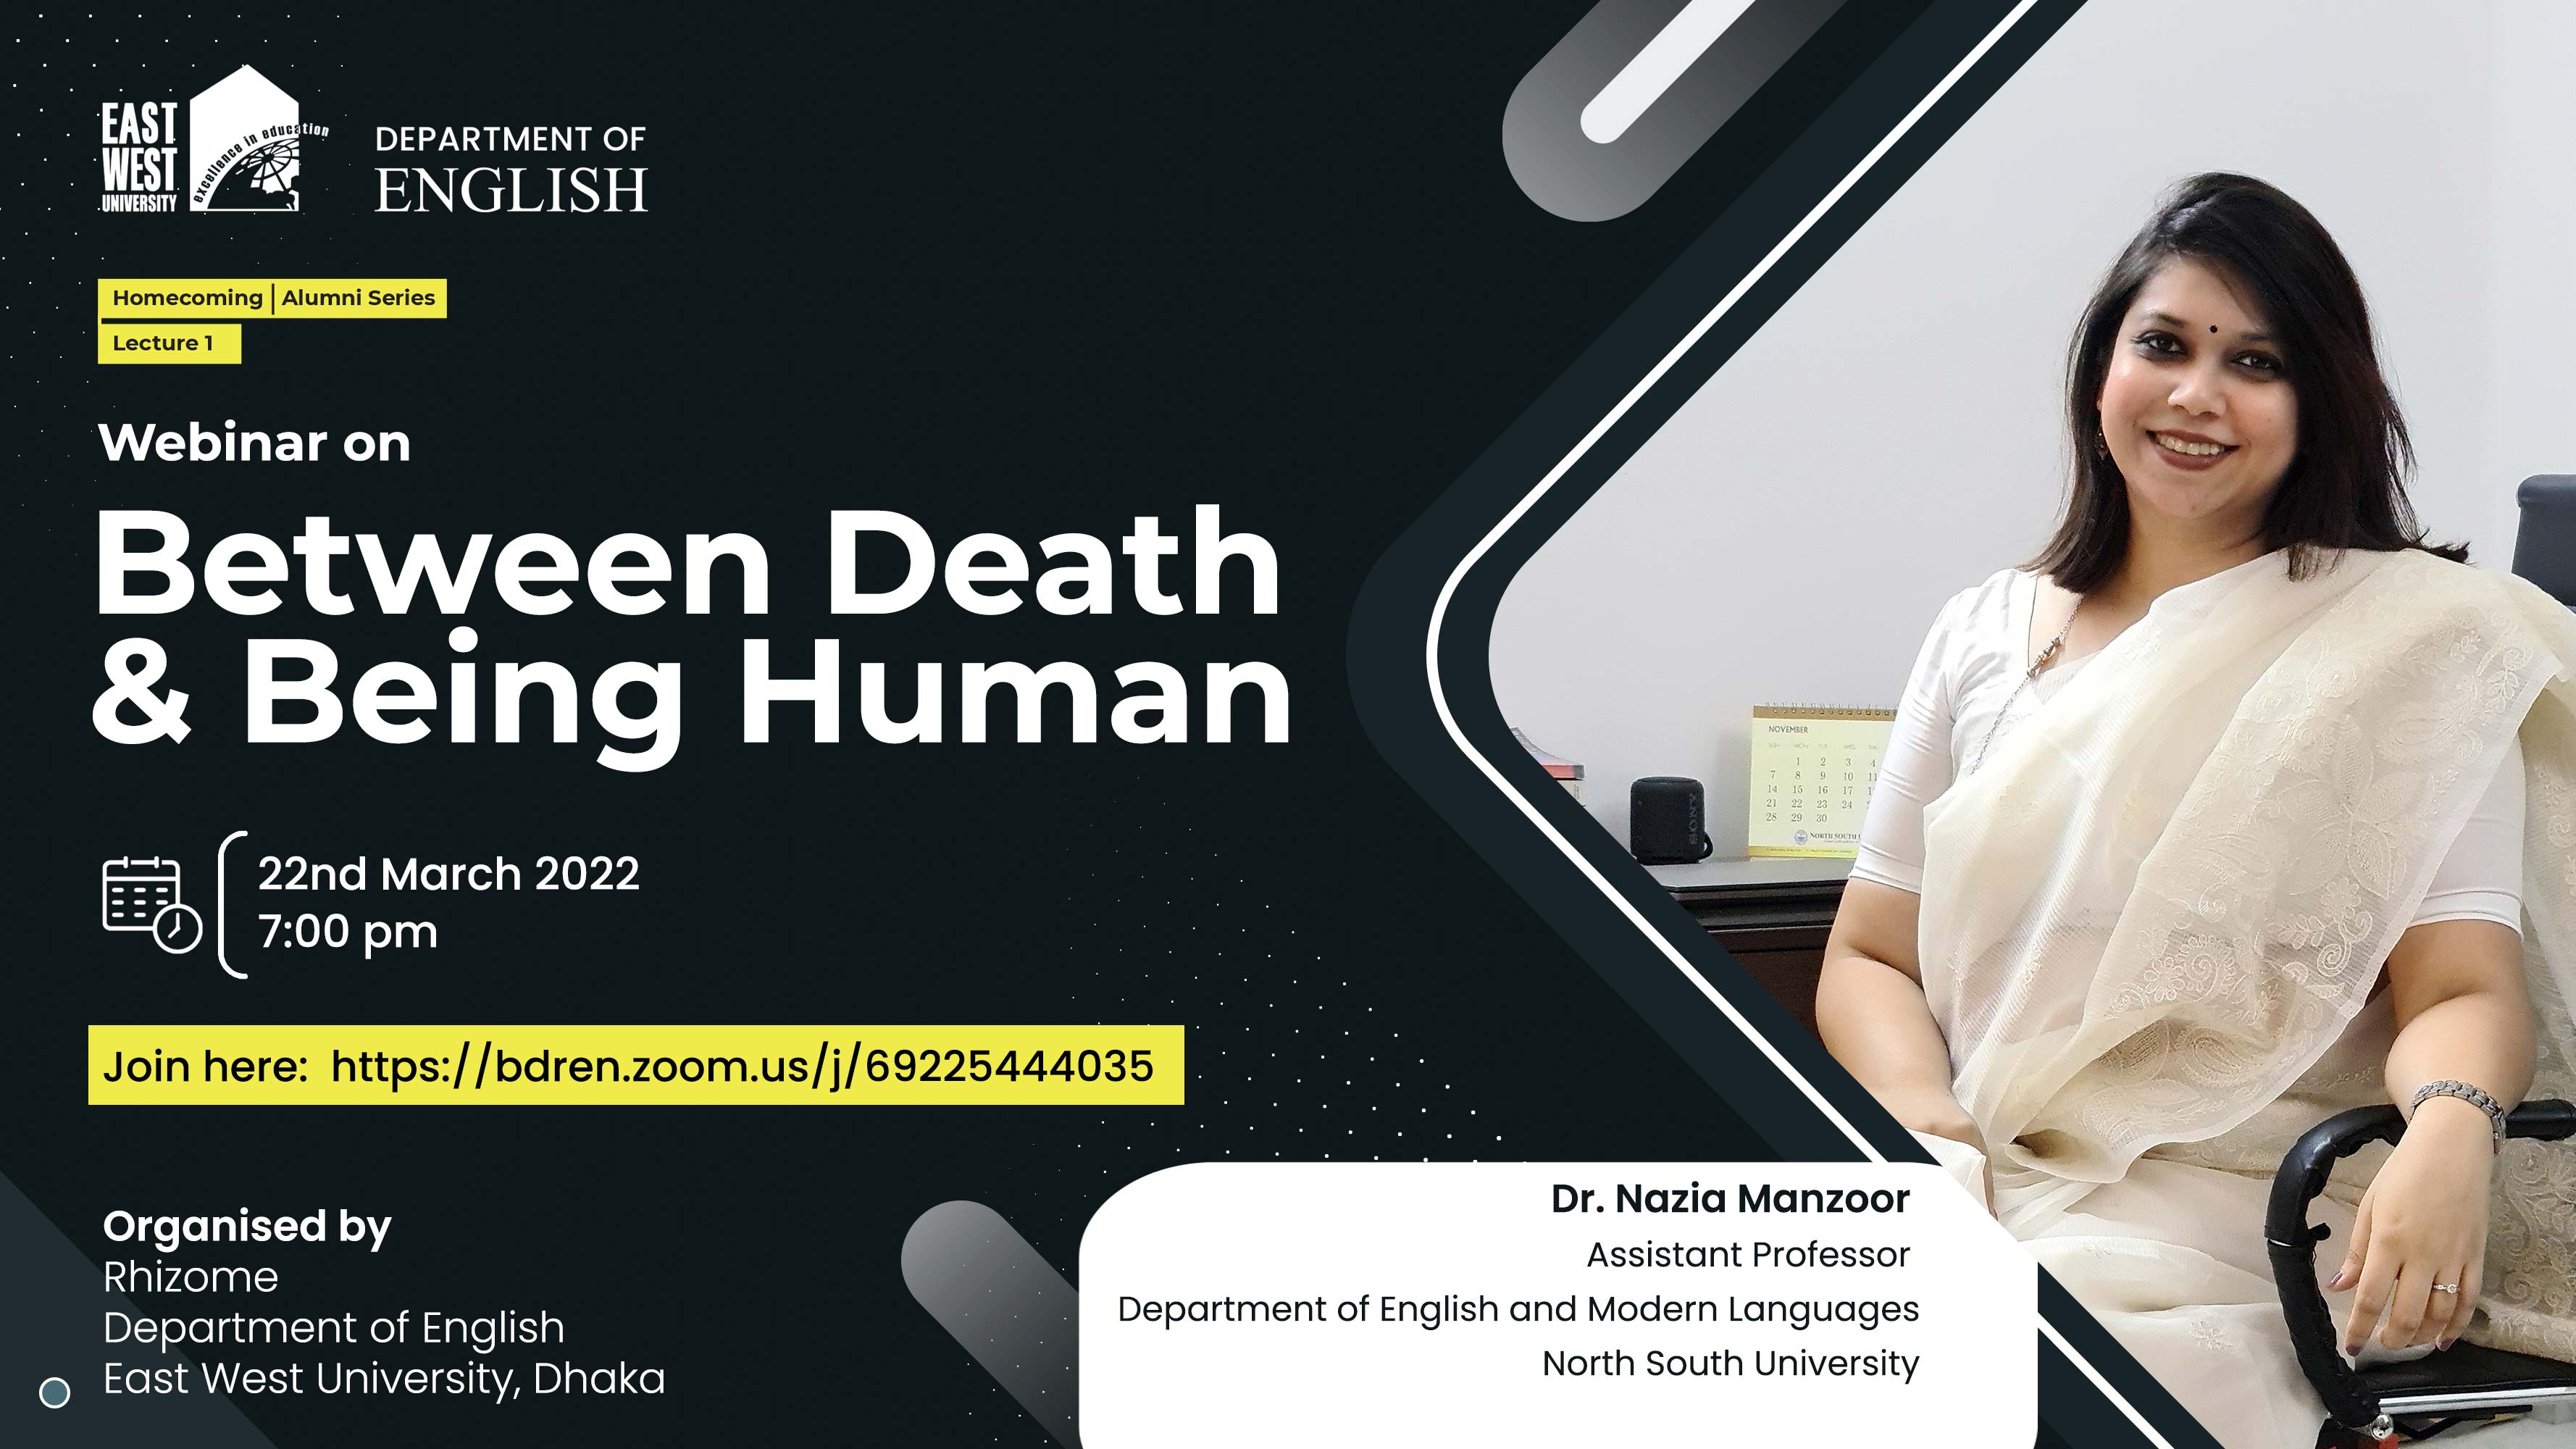 Webinar on “Between Death and Being Human”.